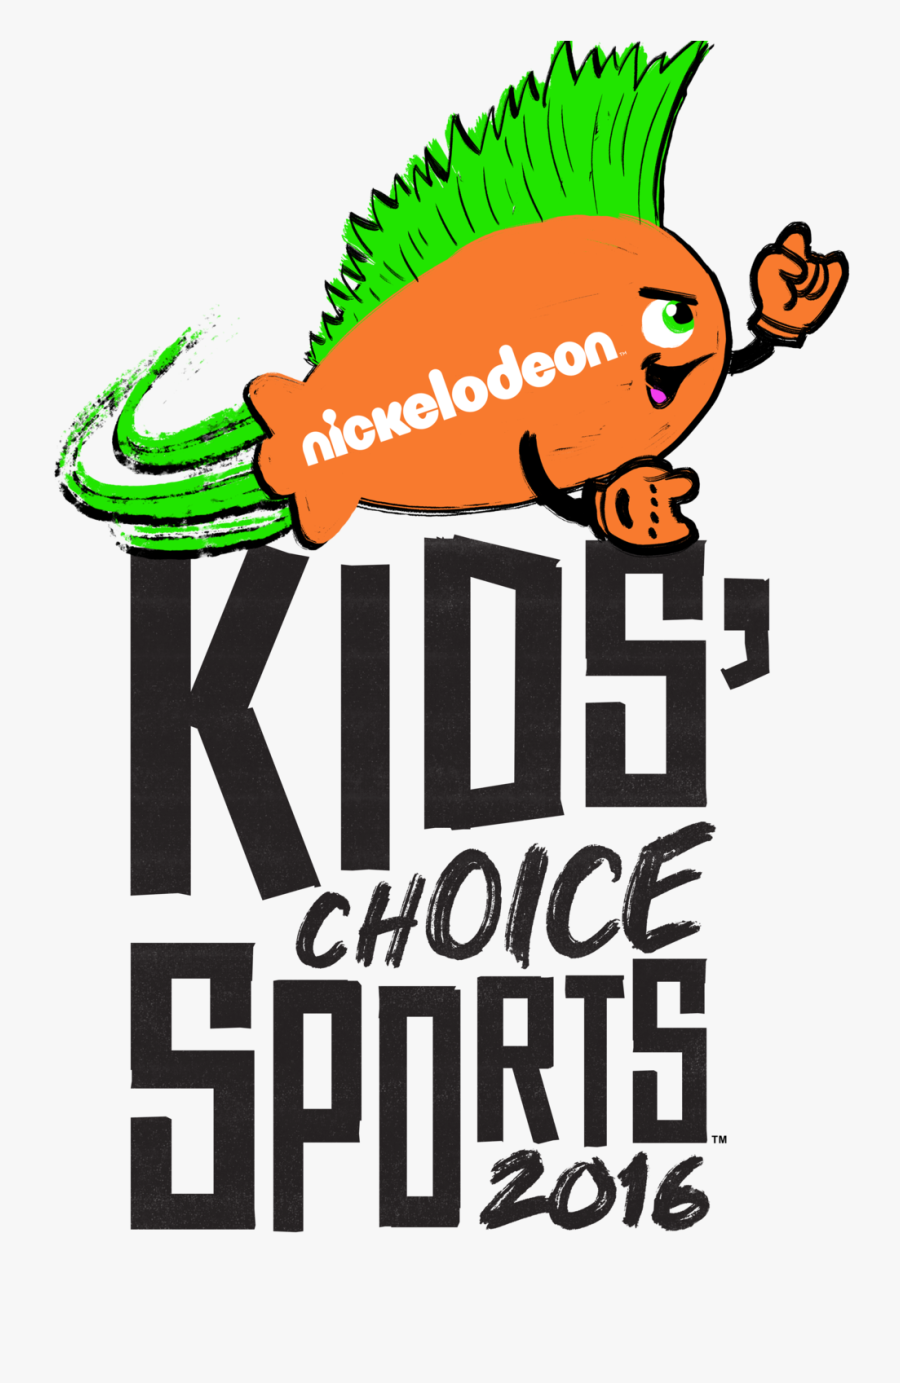 Nick kids. Никелодеон. Nickelodeon Kids' choice Sports 2016. Nickelodeon logo. Награда Никелодеон.